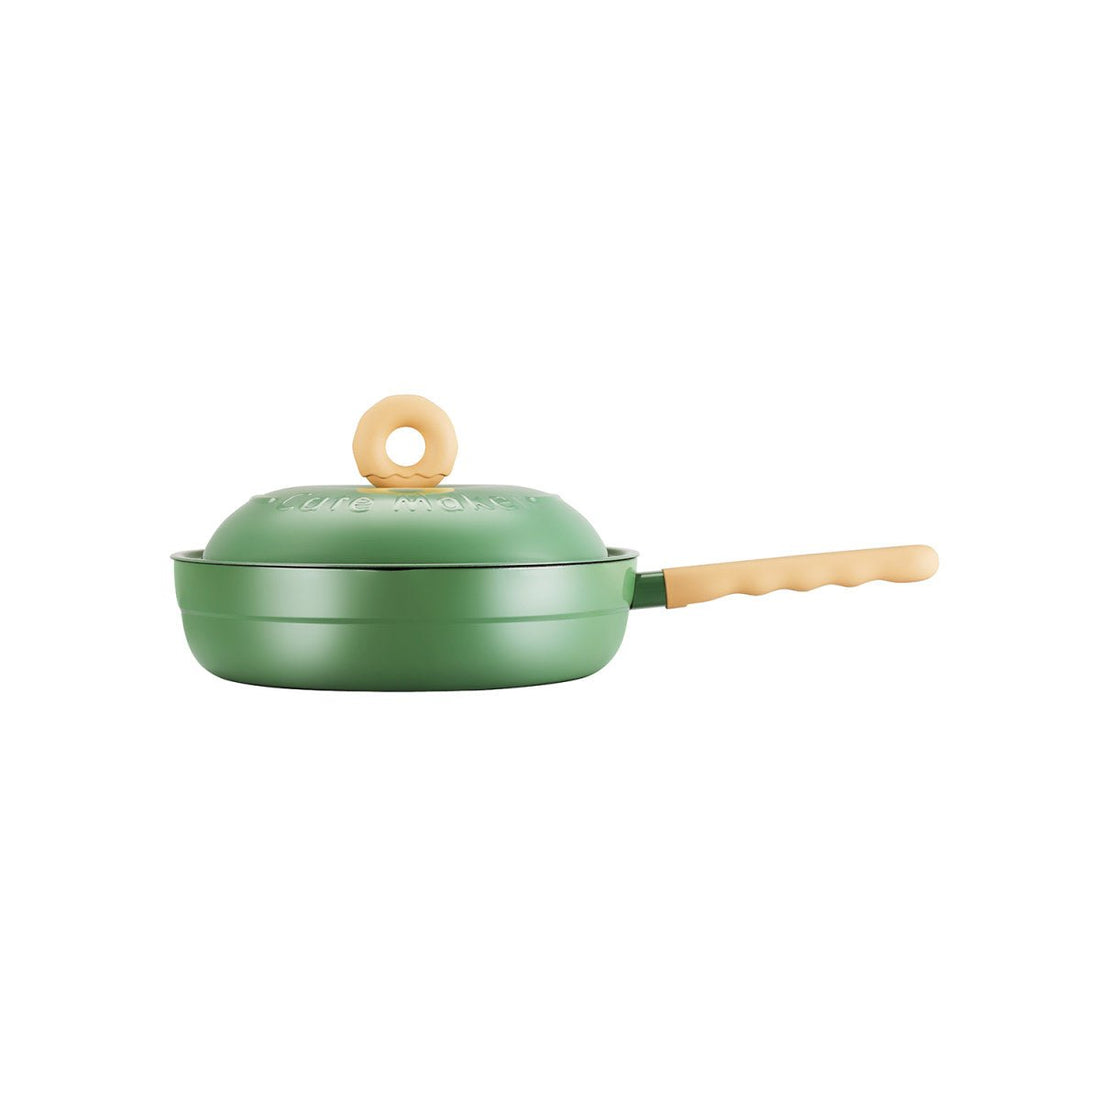 Donut Lightweight 28cm Green Non-stick Enamel-coated Frying Pan - 0cm